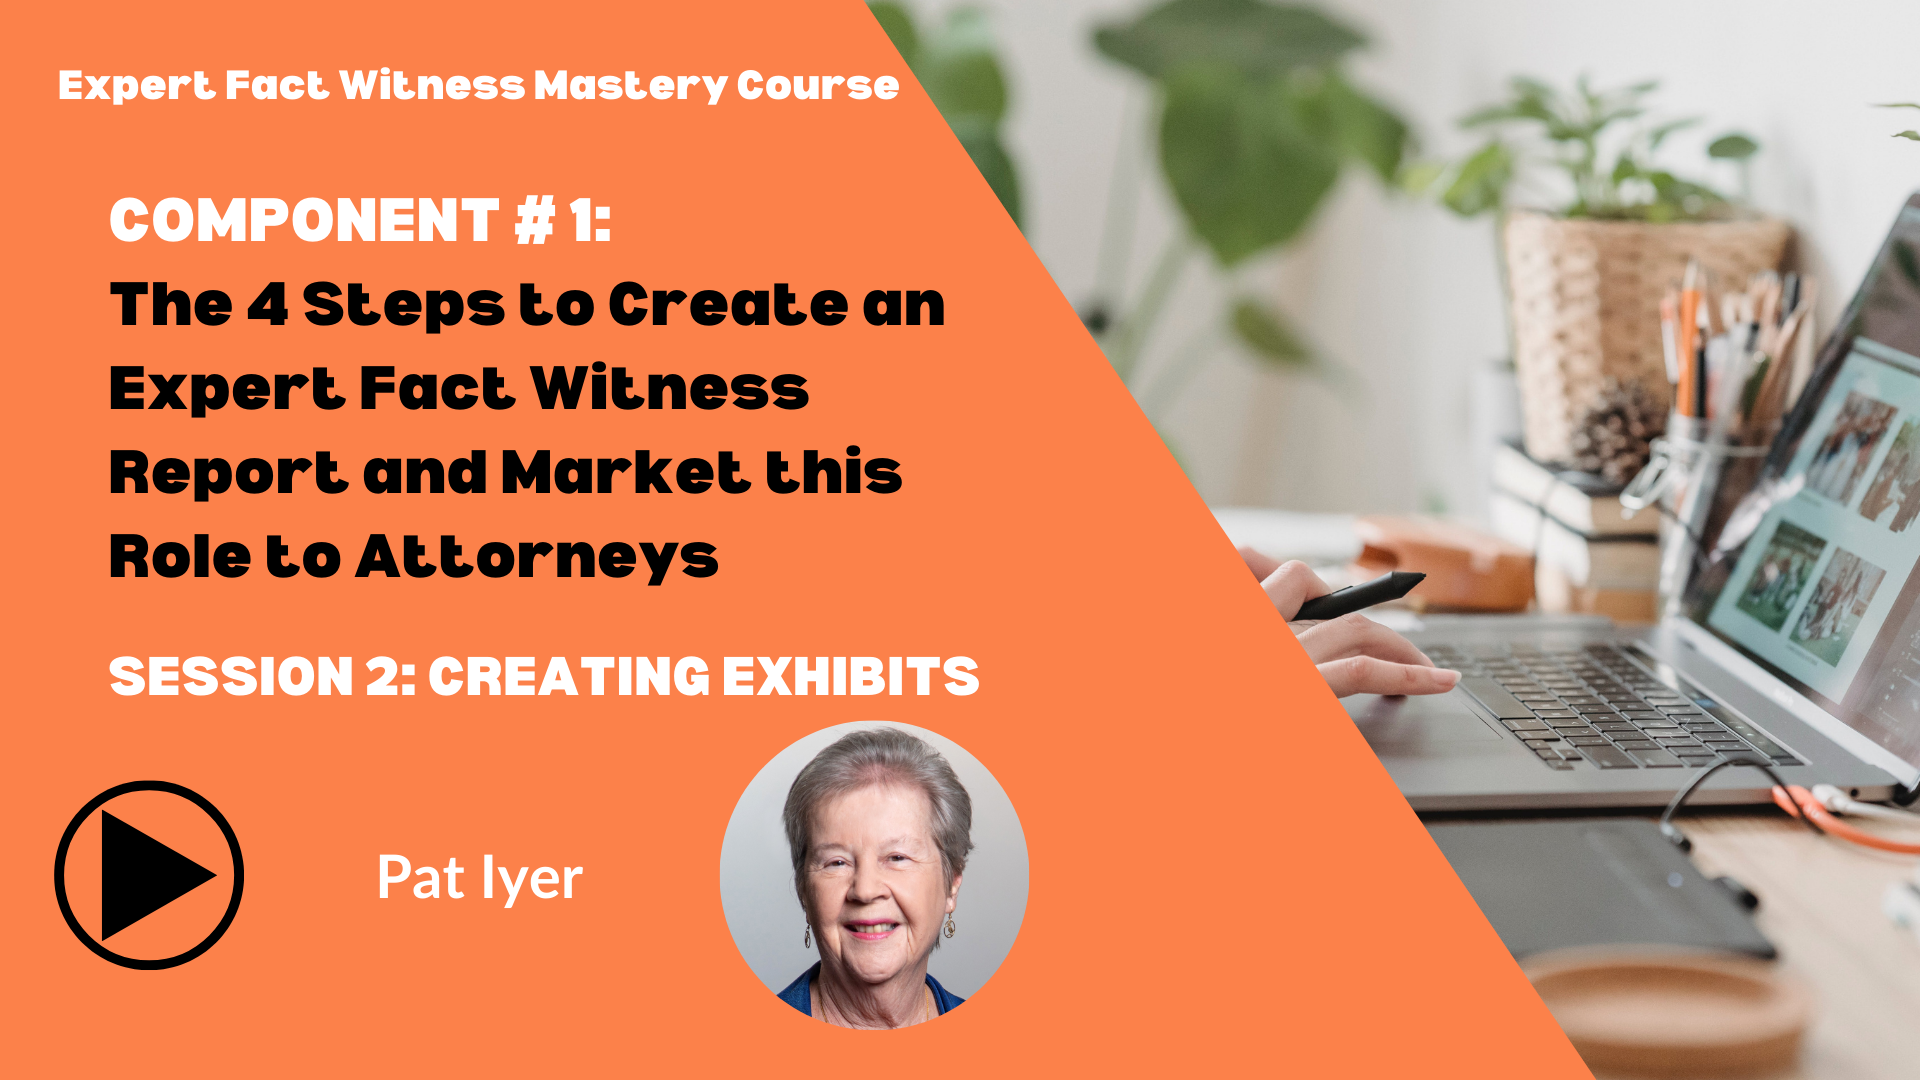 Pat Iyer - C1 Expert Fact Witness Mastery - Creating Exhibits